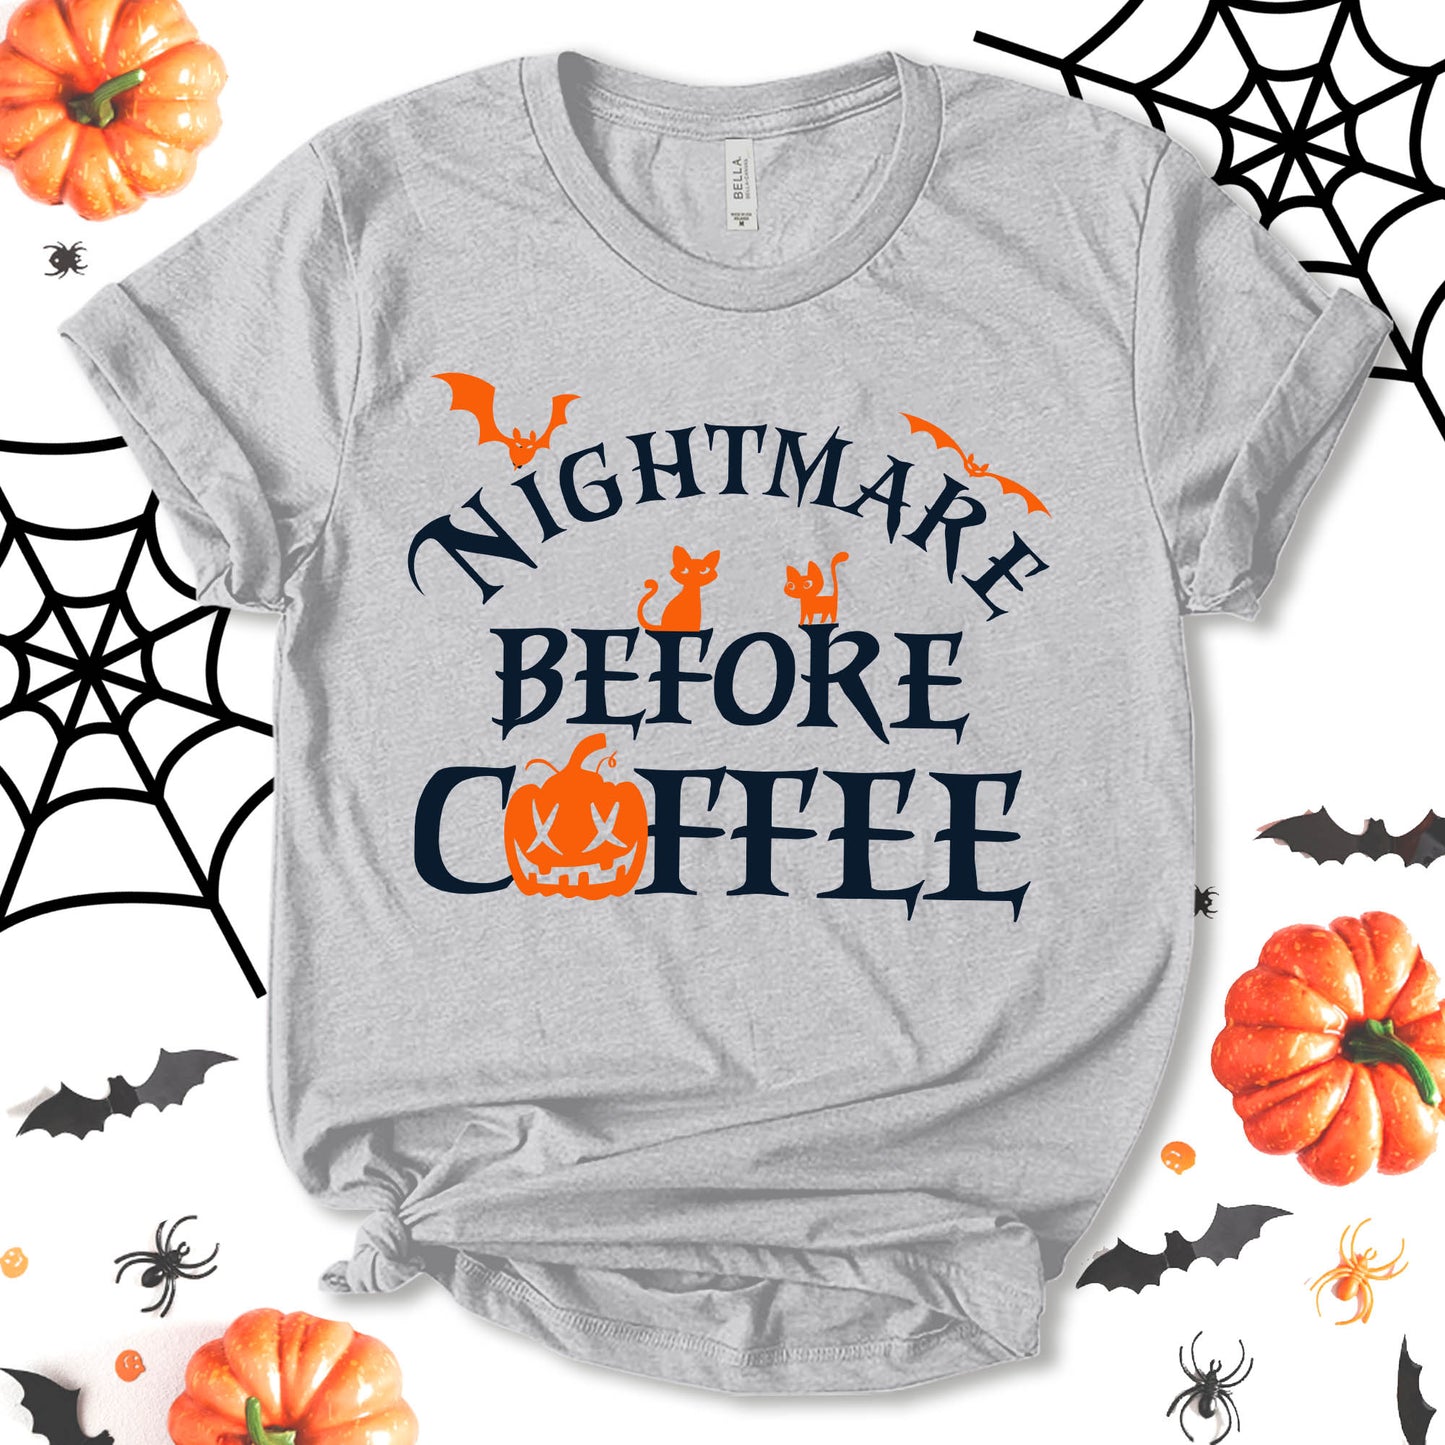 Nightmare Before Coffee Shirt, Funny Halloween Shirt, Pumpkin Shirt, Bat Shirt, Coffee Shirt, Party Shirt, Funny Coffee Shirt, Fall Shirt, Holiday Shirt, Unisex T-shirt